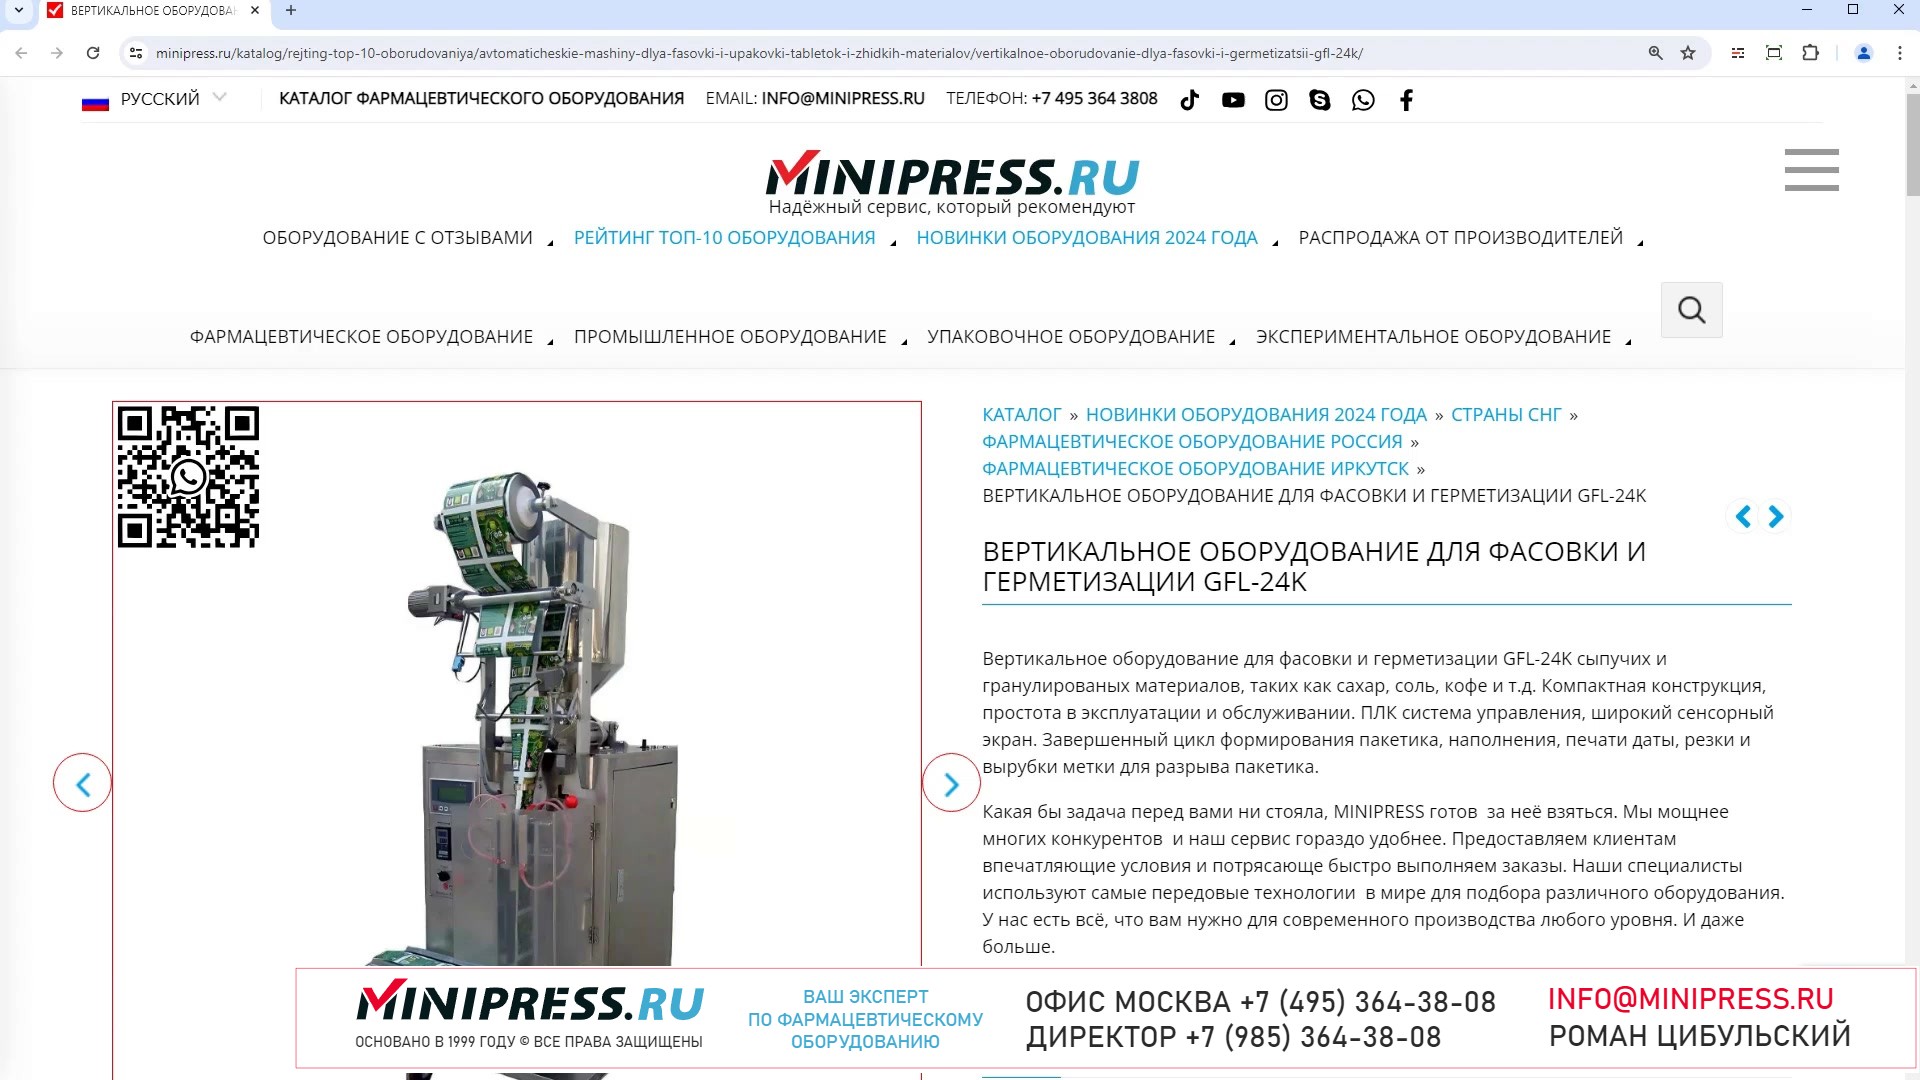 Minipress.ru Вертикальное оборудование для фасовки и герметизации GFL-24K